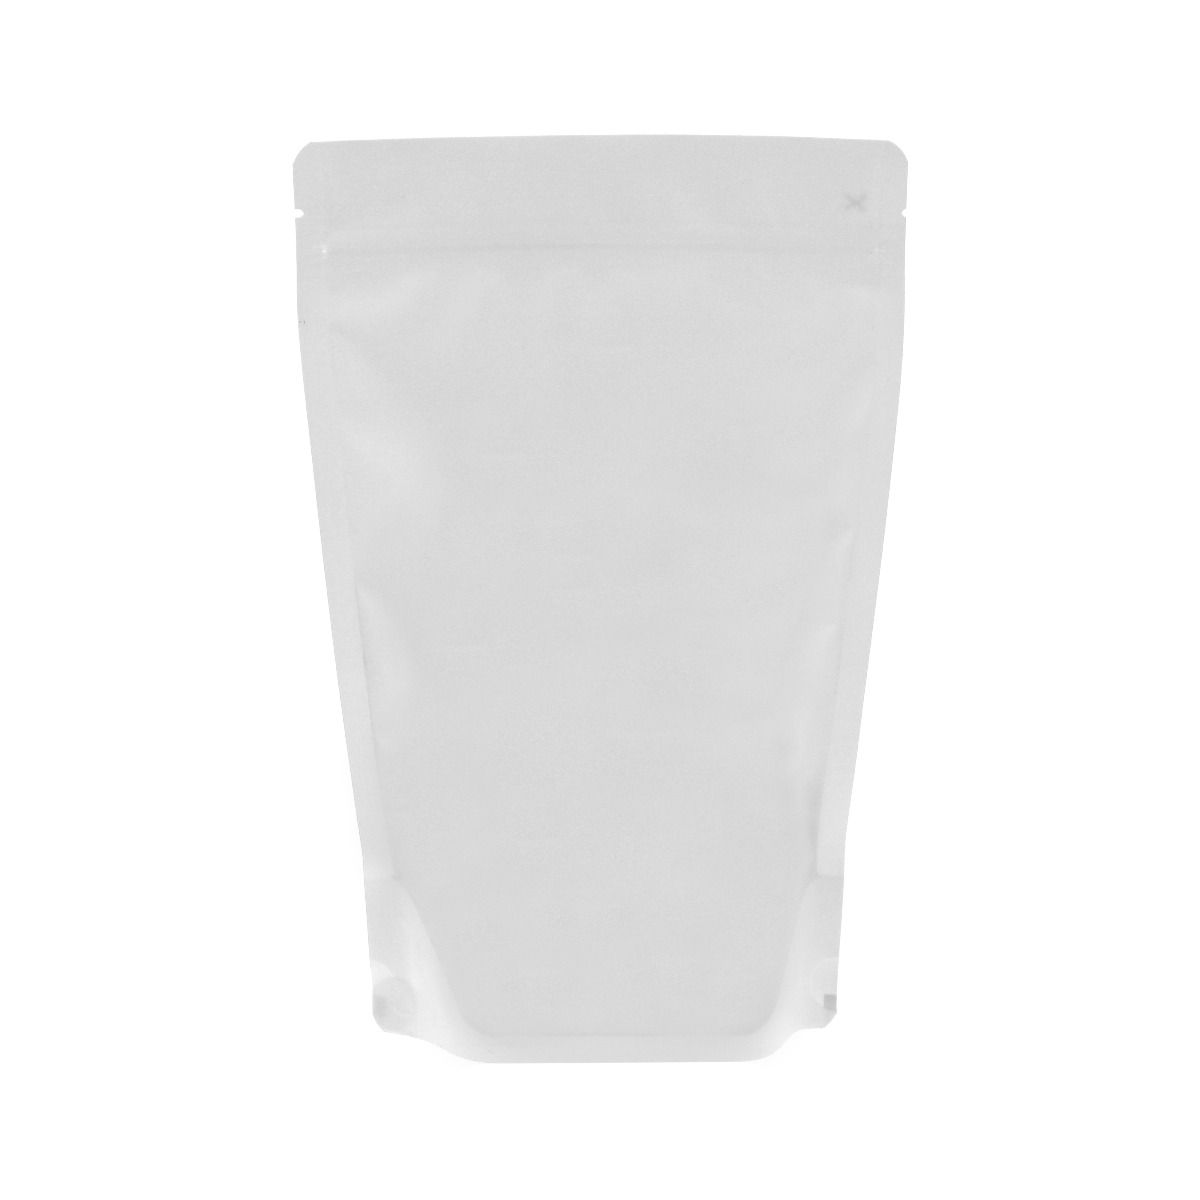 Coffee pouch - matt white (100% recyclable)